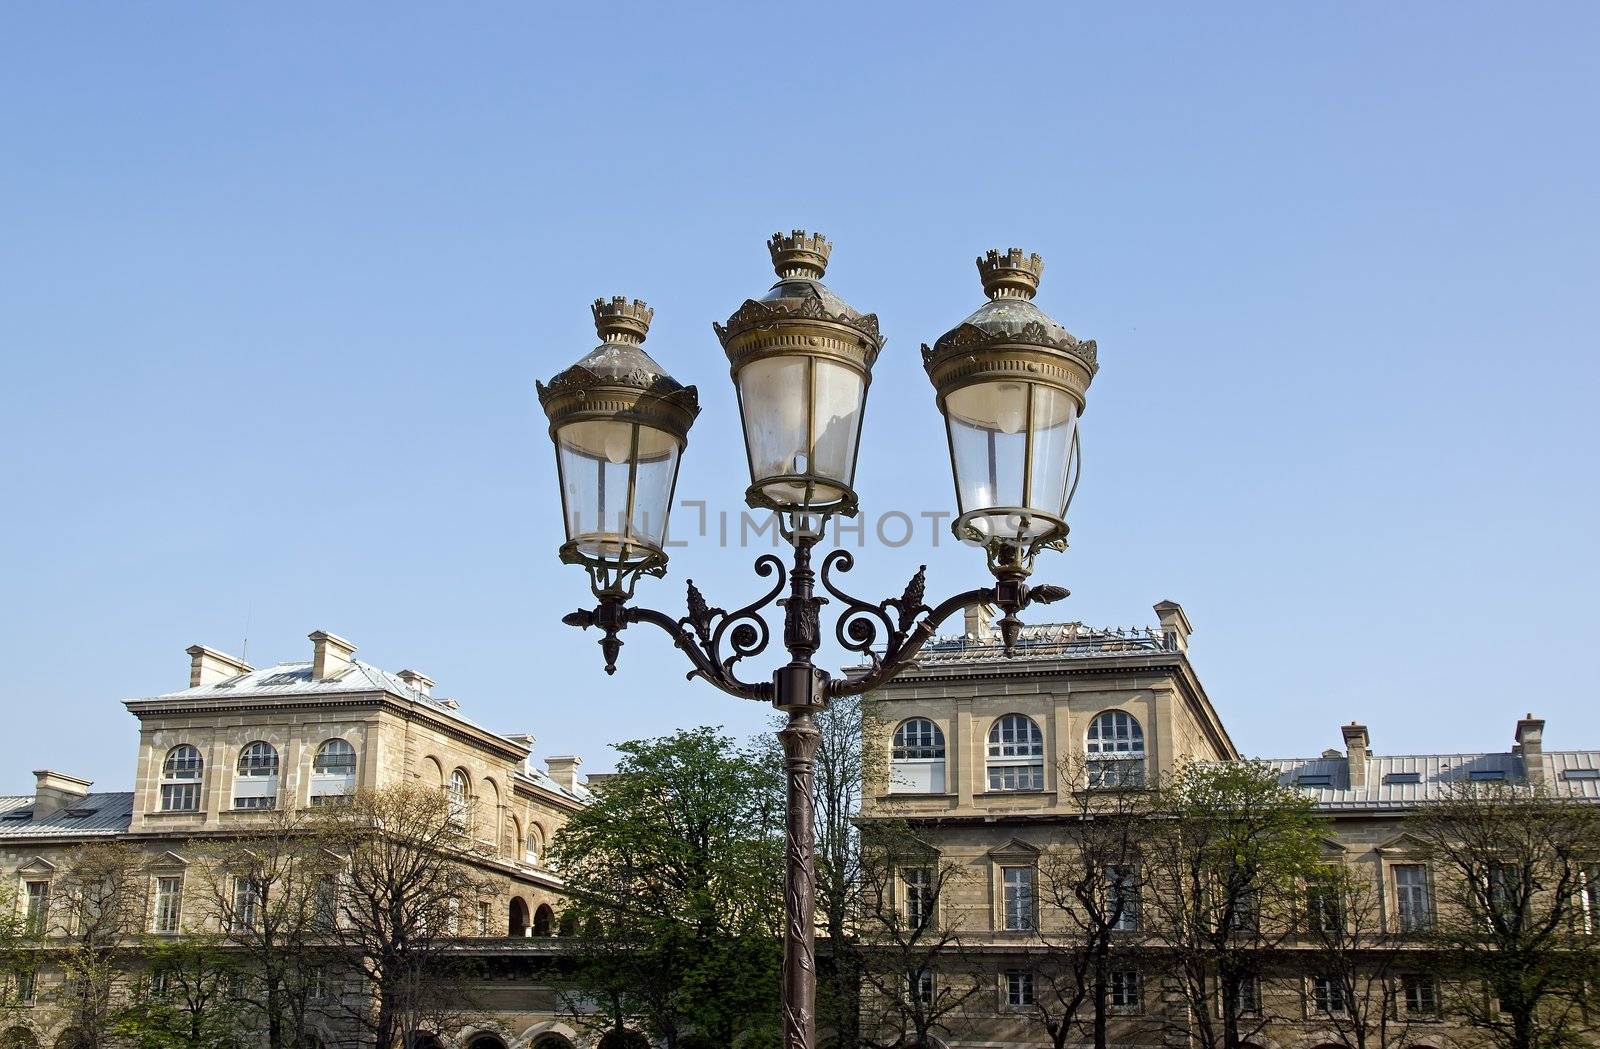 former Parisian lamppost, the retro charm of Paris (France)